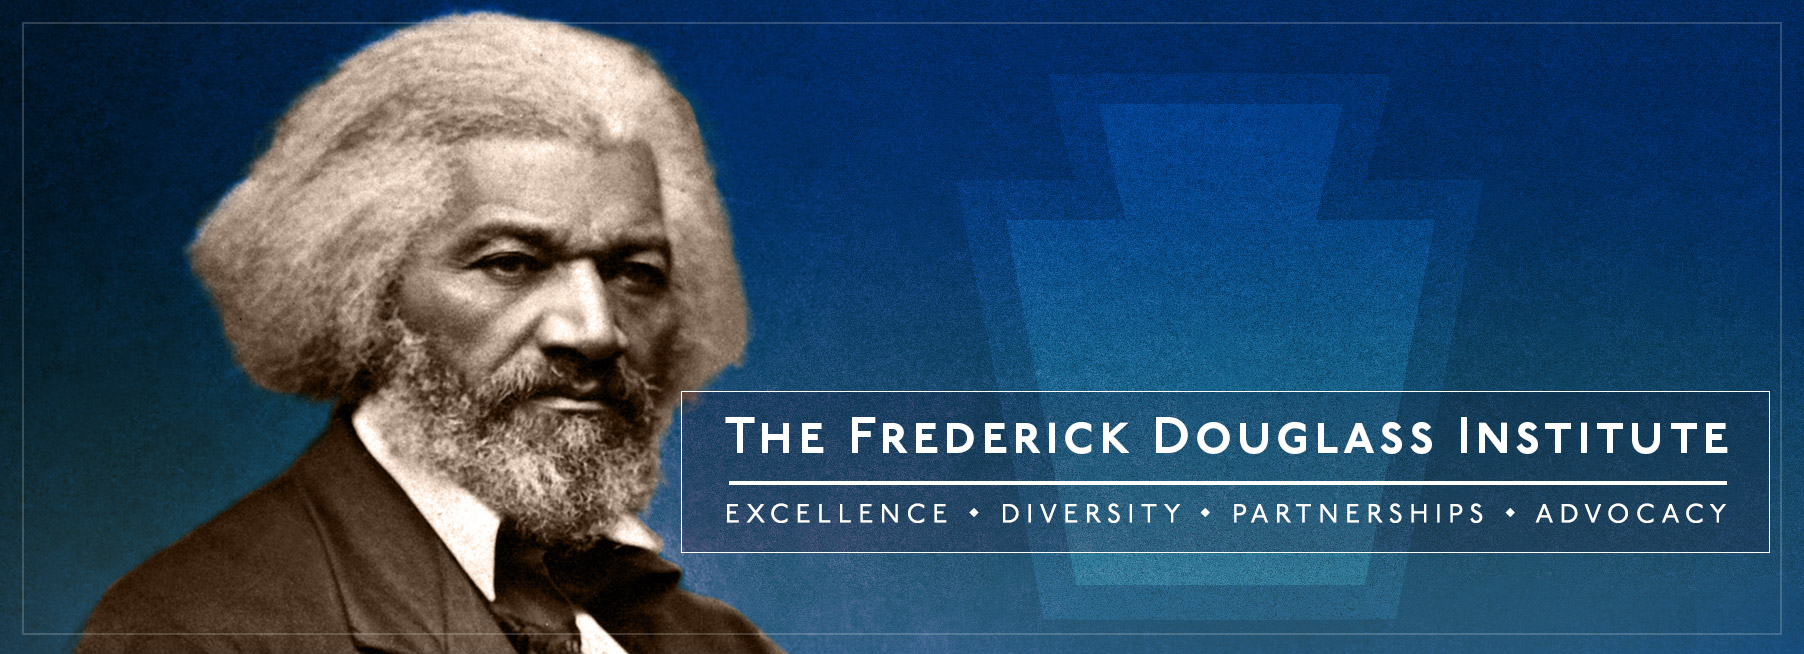 Frederick Douglass Institute